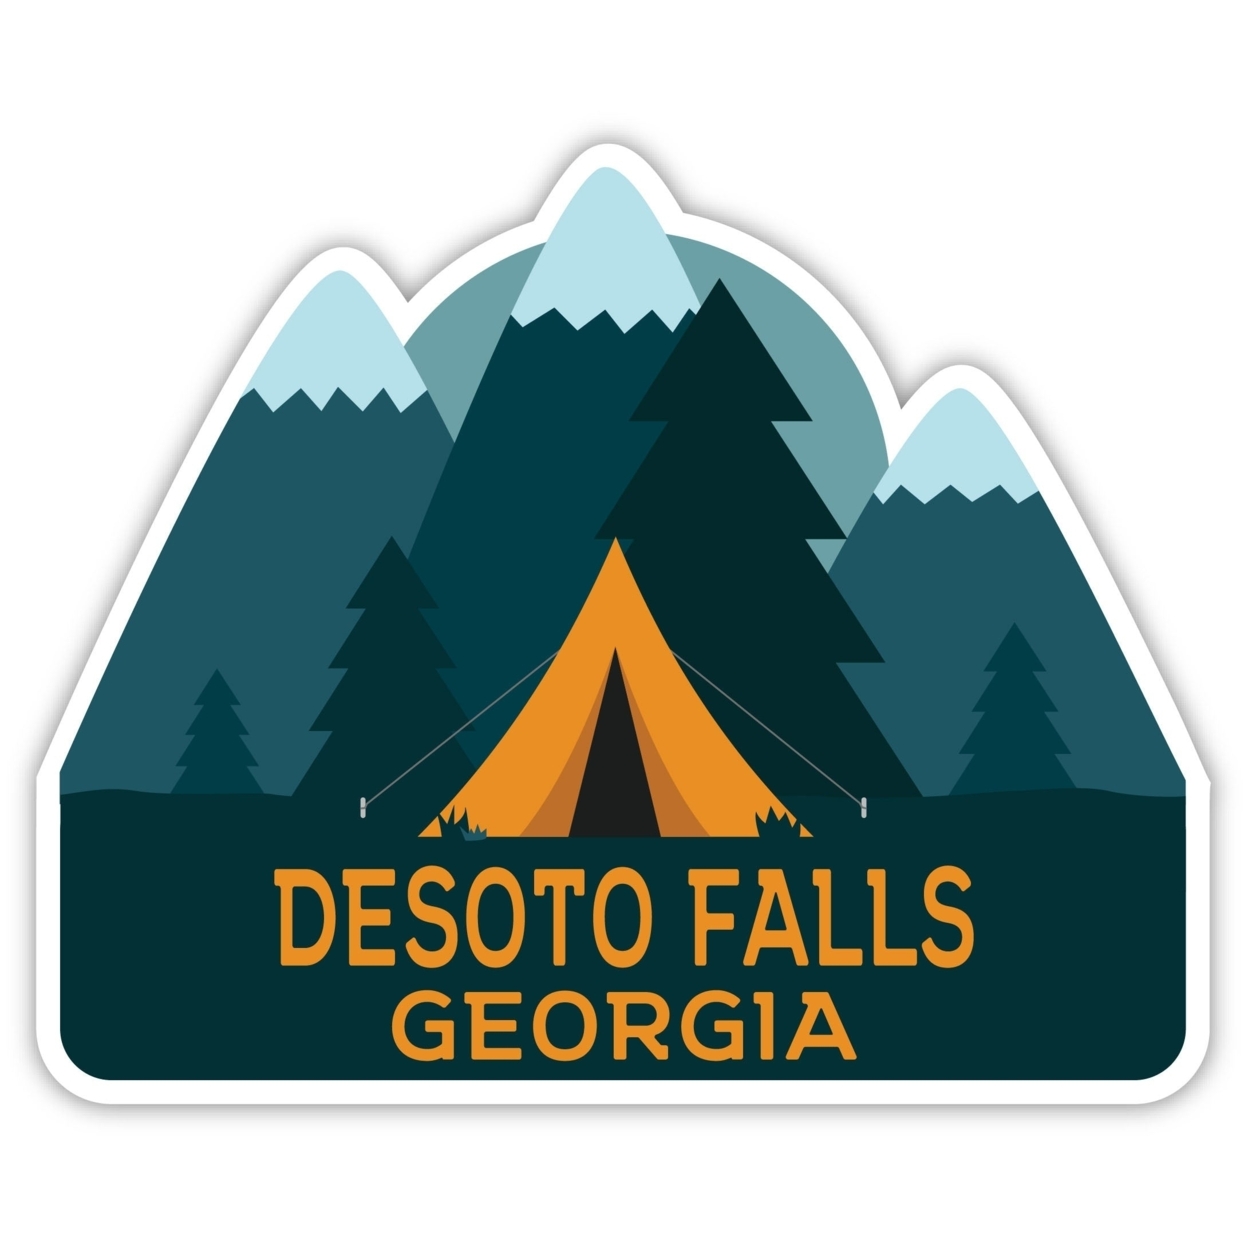 DeSoto Falls Georgia Souvenir Decorative Stickers (Choose Theme And Size) - 4-Pack, 4-Inch, Tent